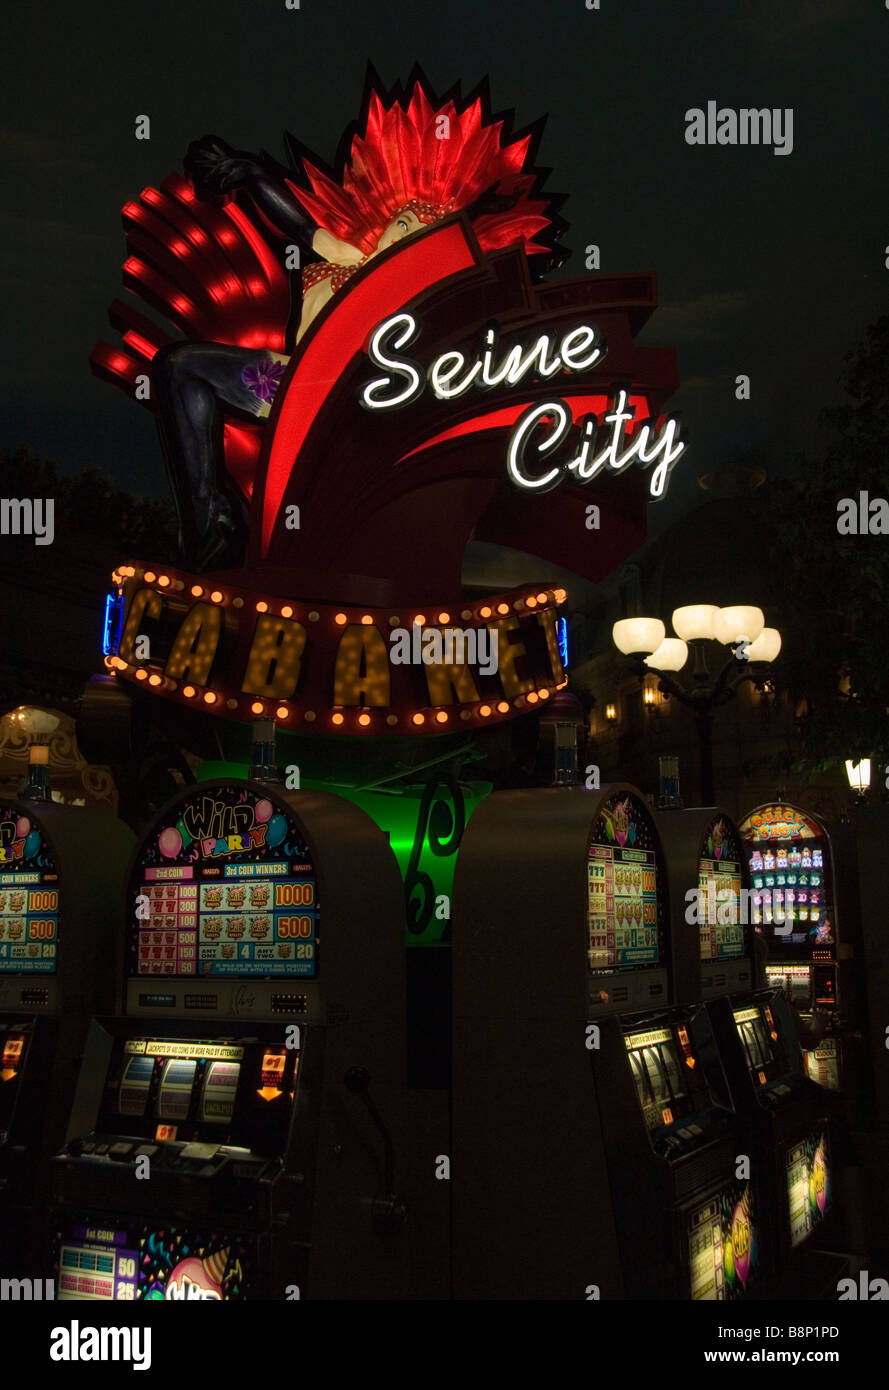 Seine City Slot Machine in the Parisian Casino, Las Vegas Stock Photo